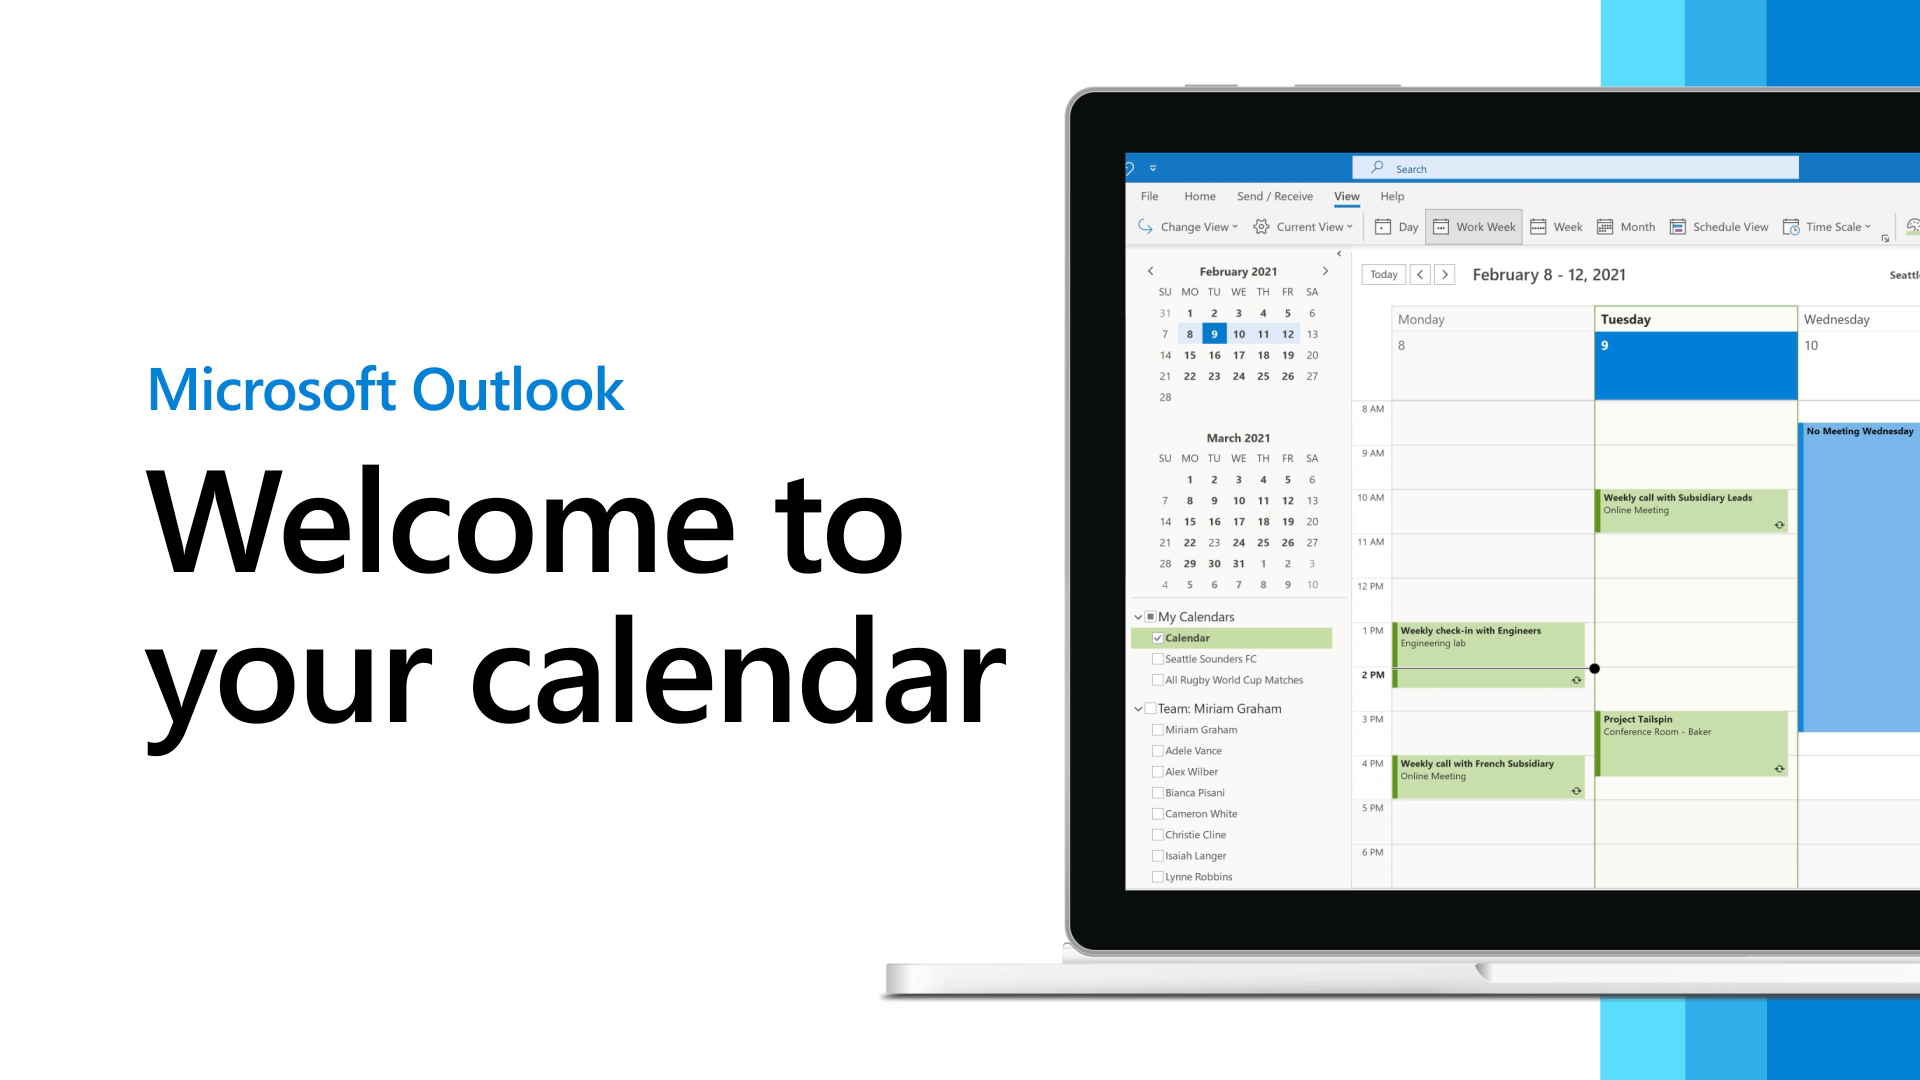 Work from home app - Microsoft Outlook Calendar